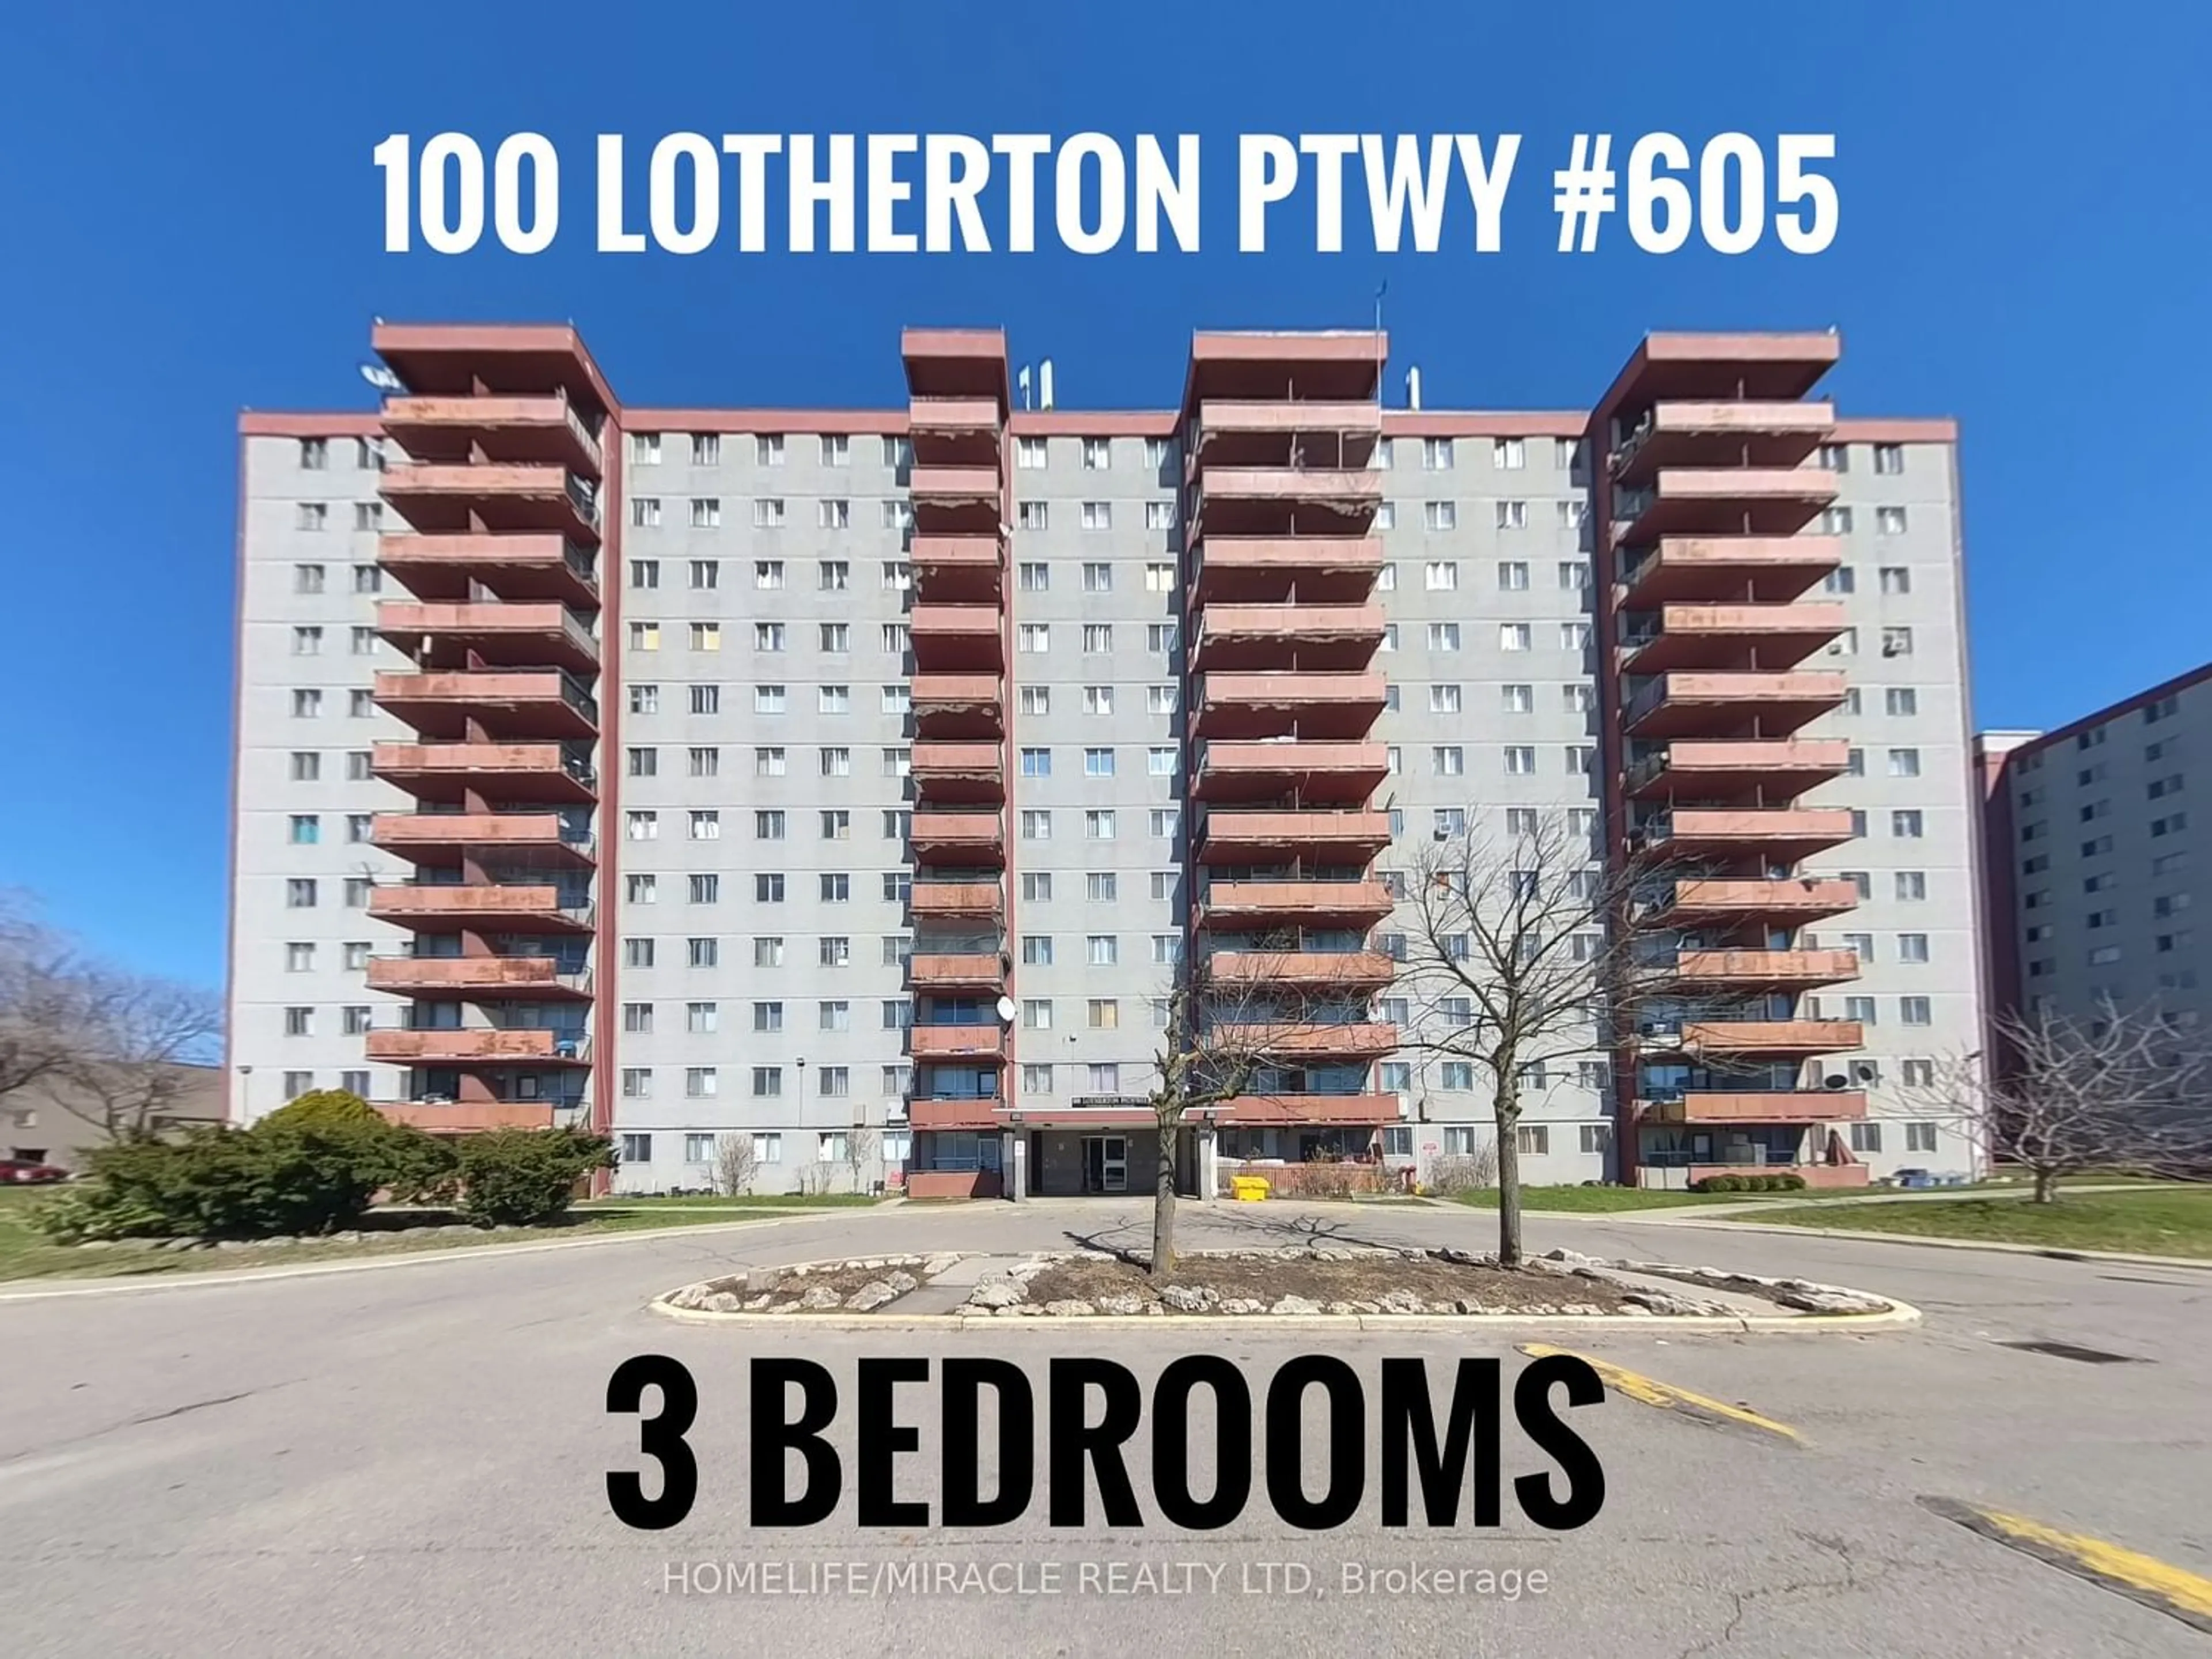 Bedroom for 100 Lotherton Ptwy #605, Toronto Ontario M6B 2G8